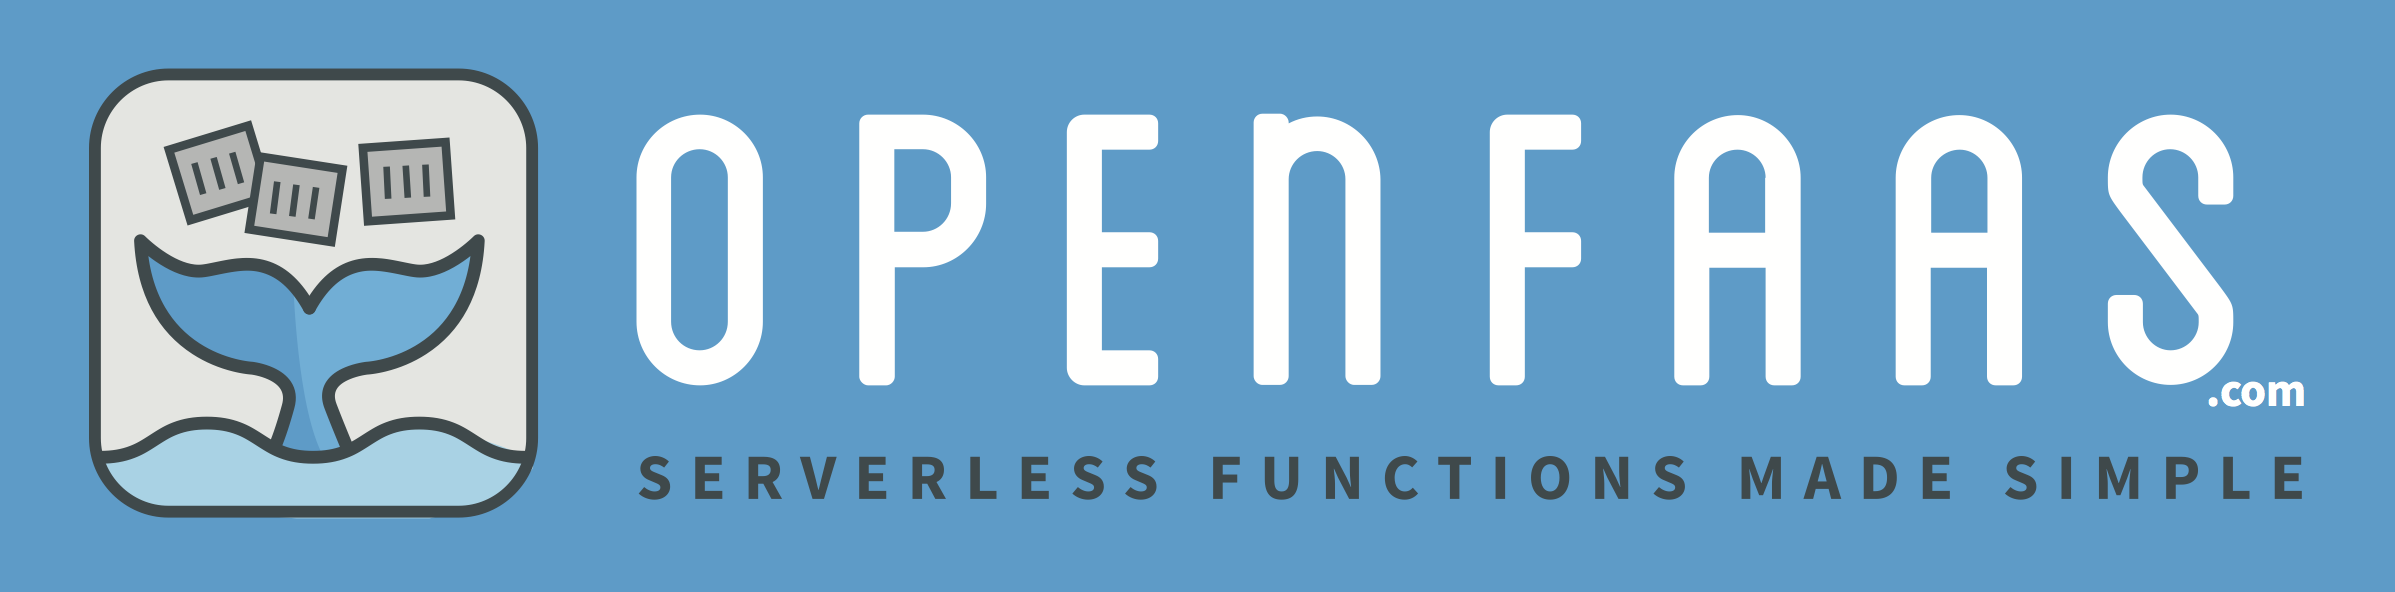 openfaas logo